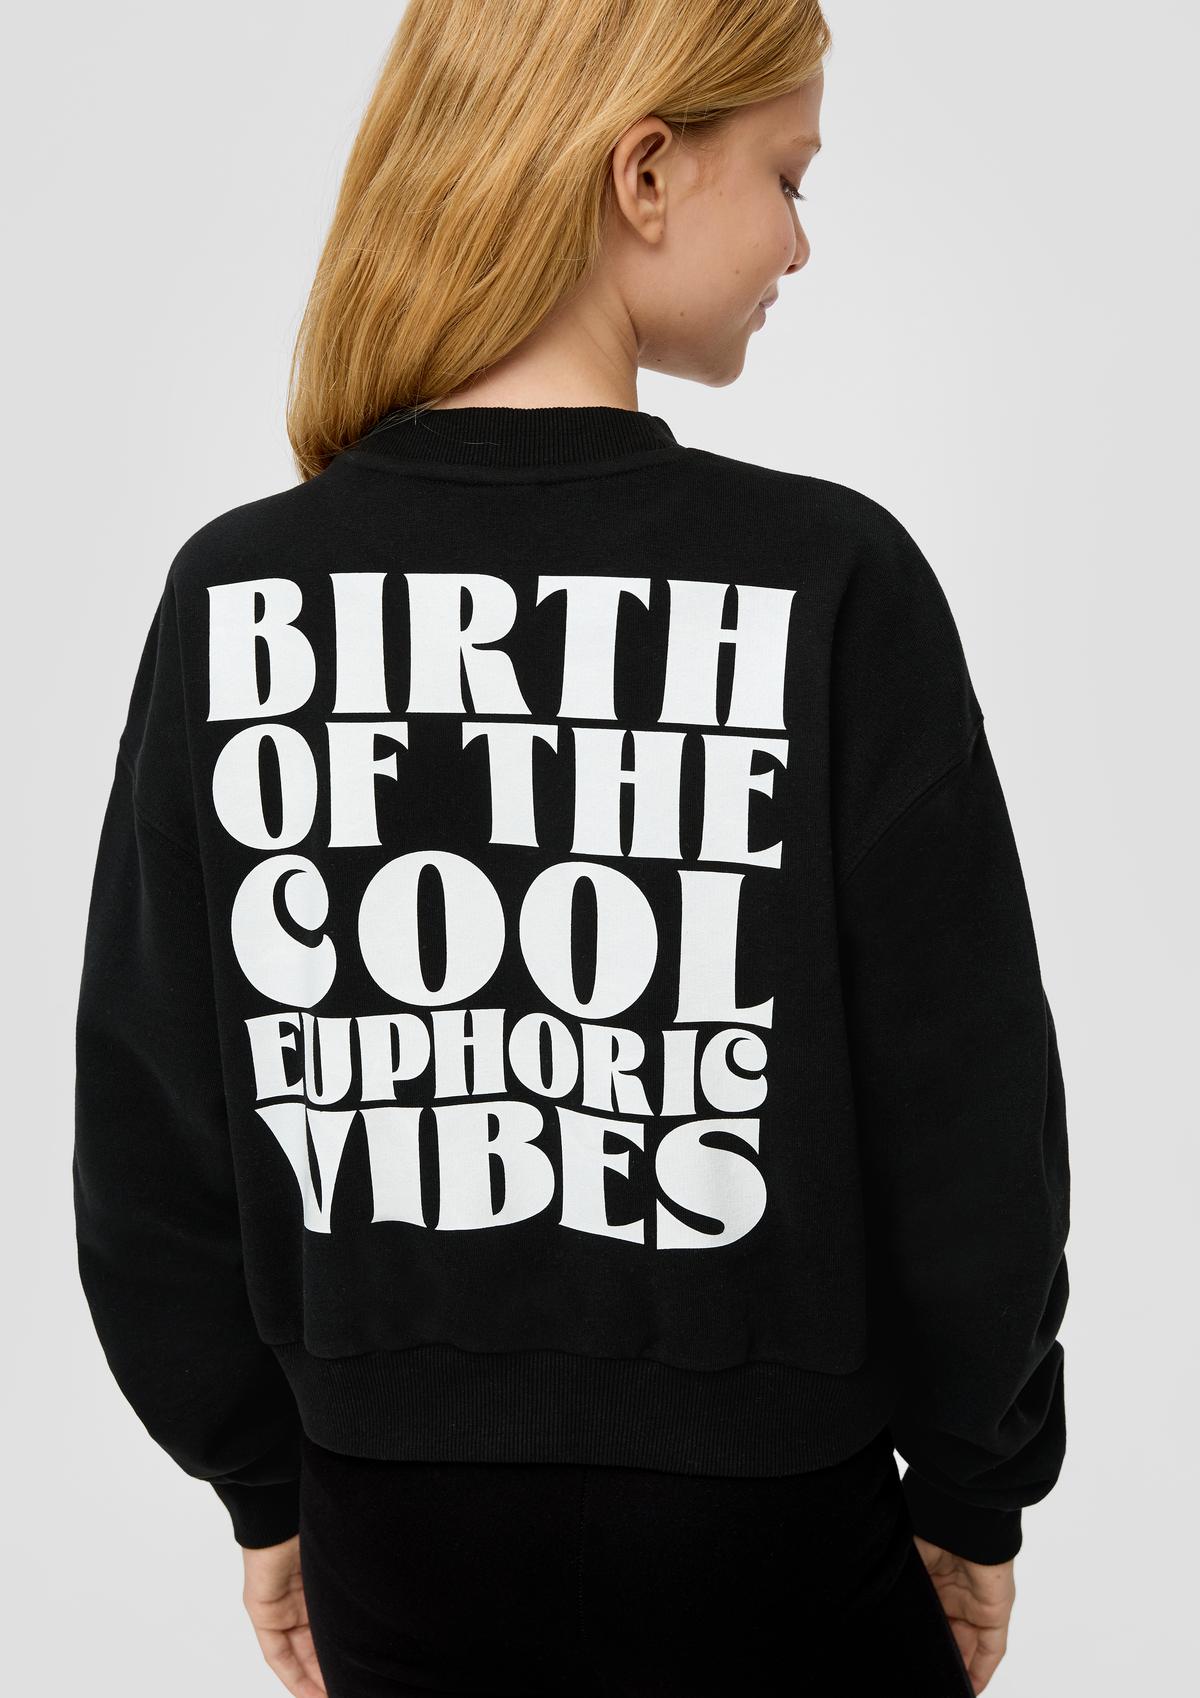 Sweatshirt with a back print